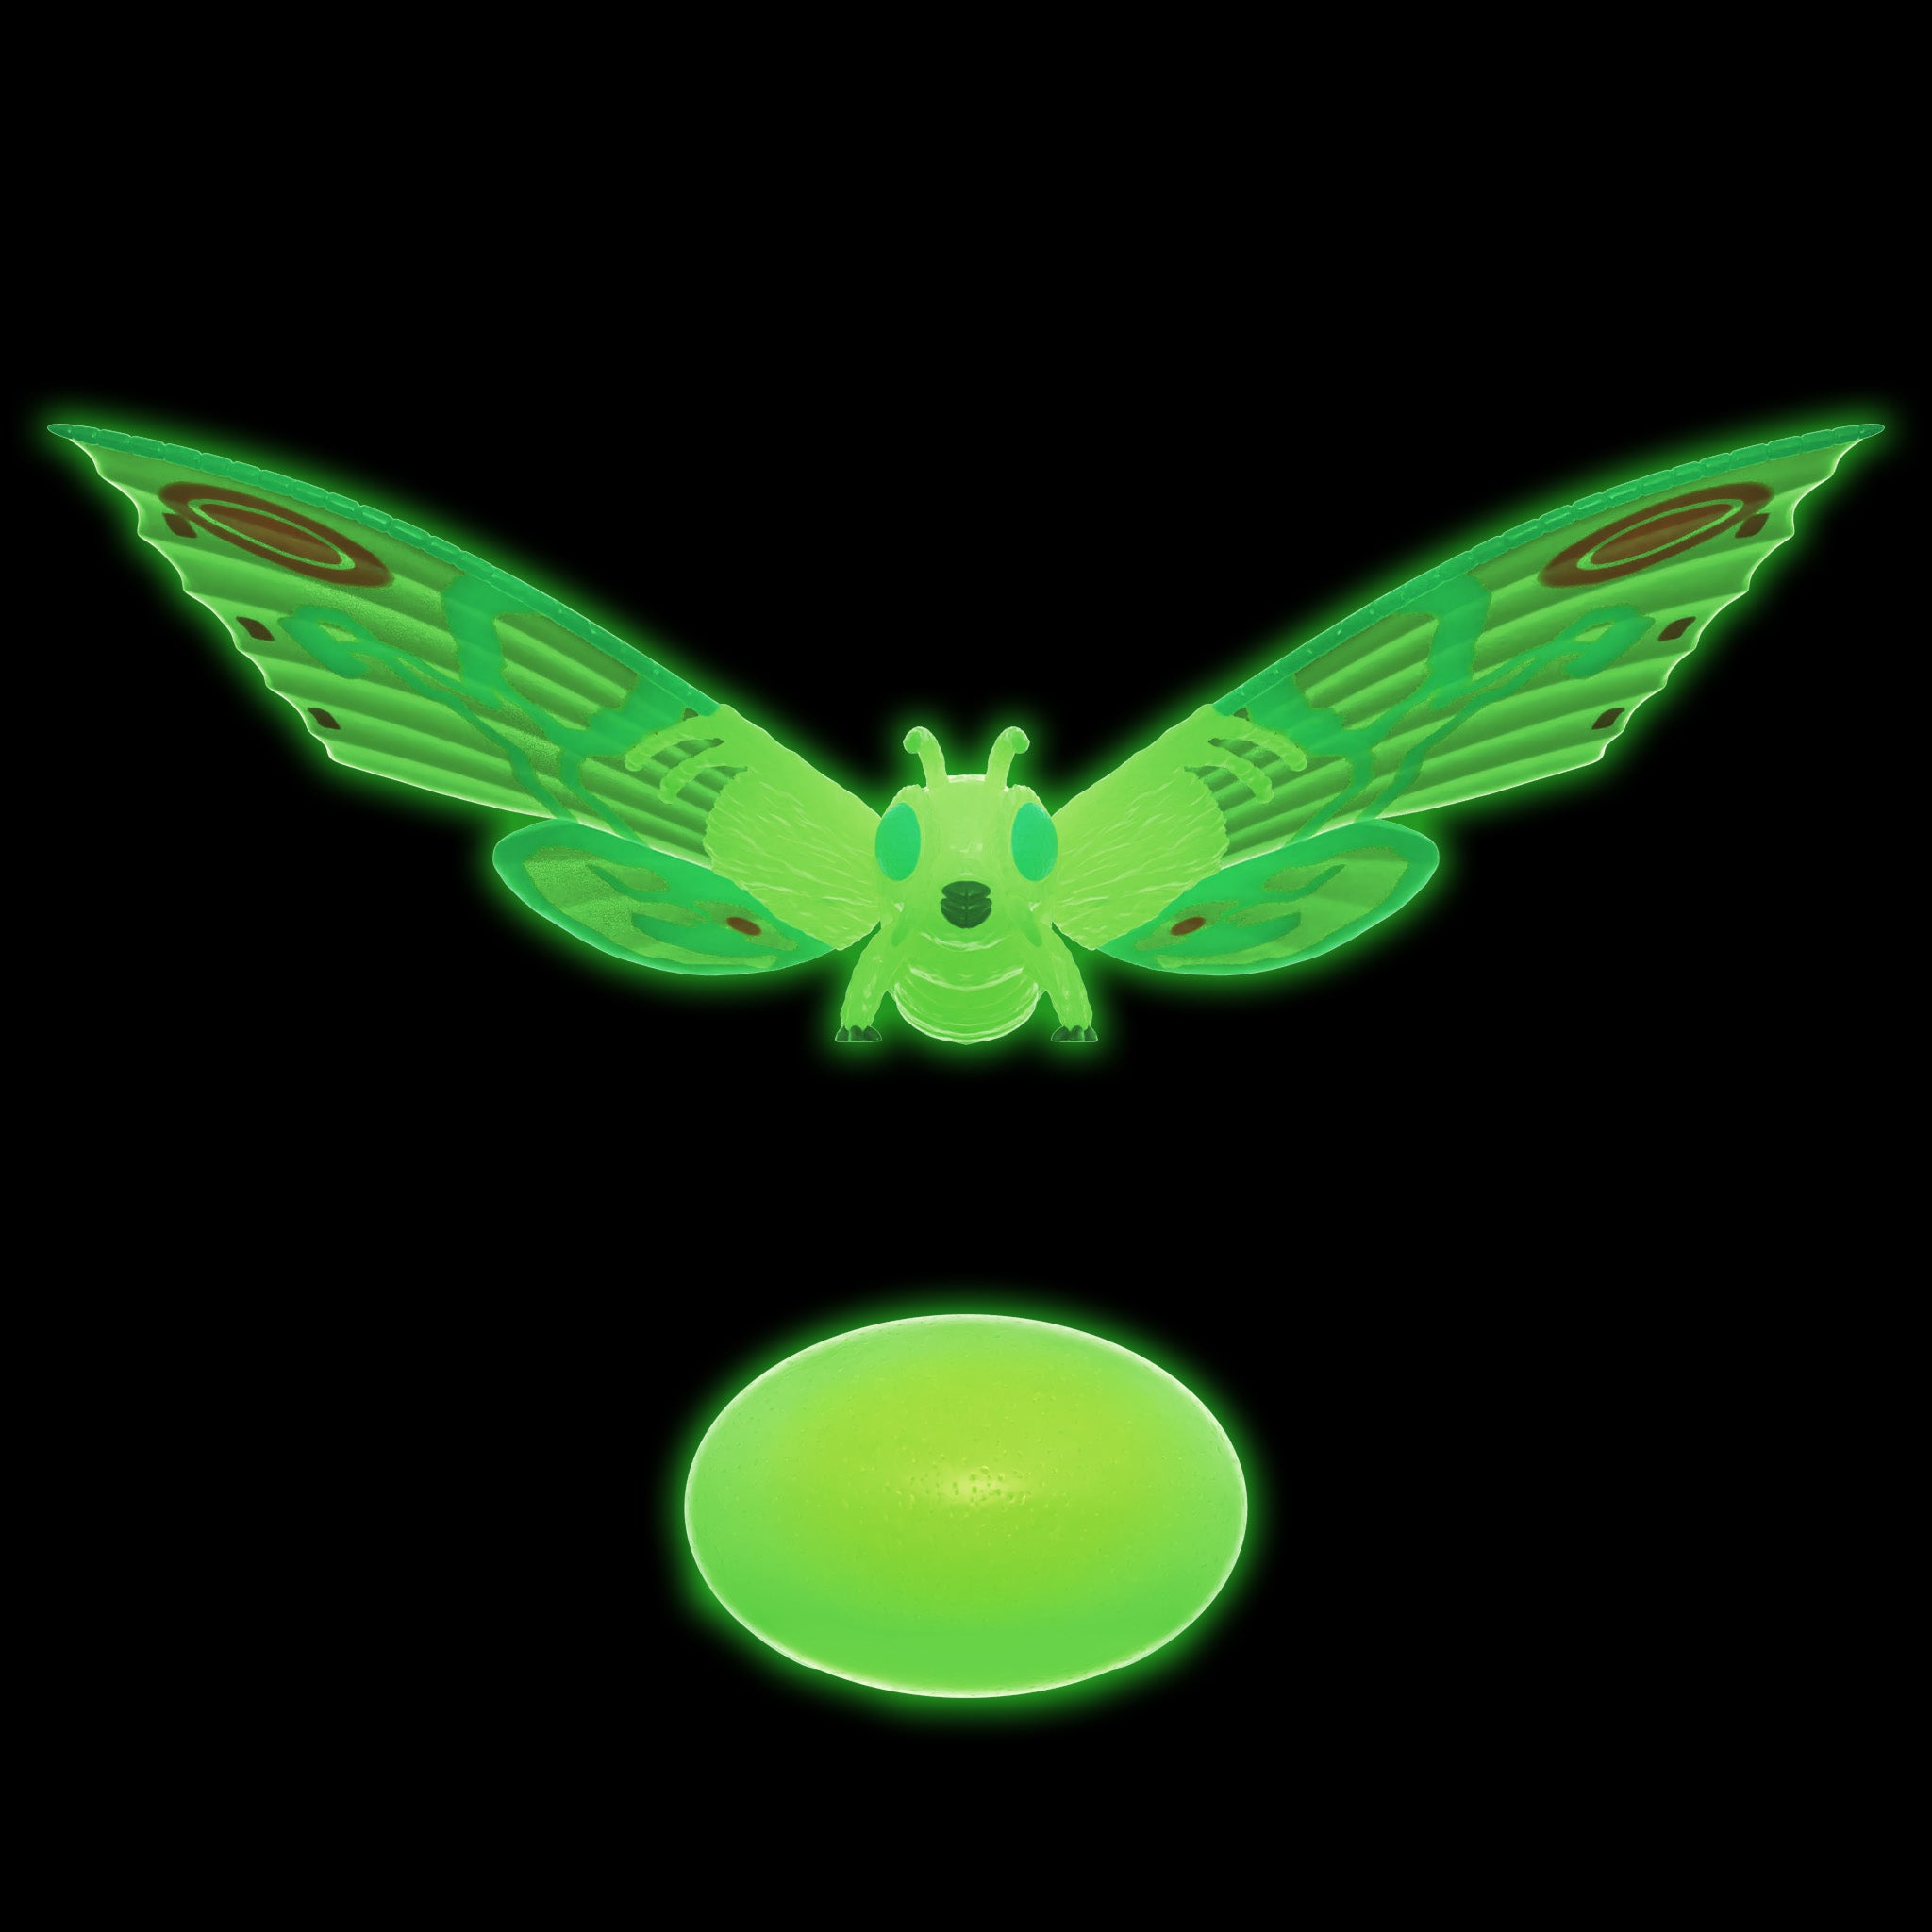 Toho ReAction Figure Wave 1 - Shogun Mothra (Glow)